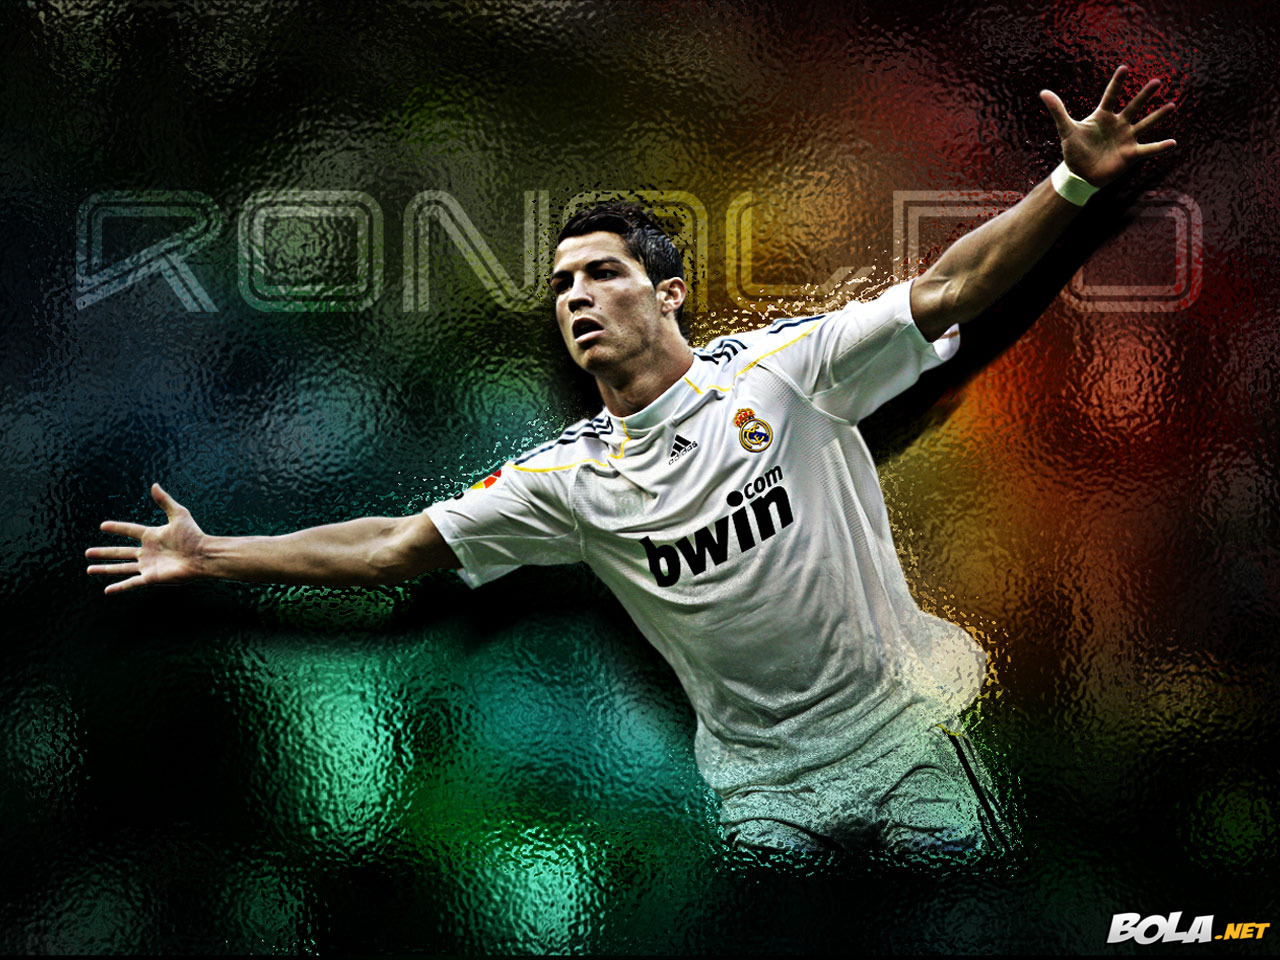 Deskripsi : Wallpaper Ronaldo Flies, size: 1280x960